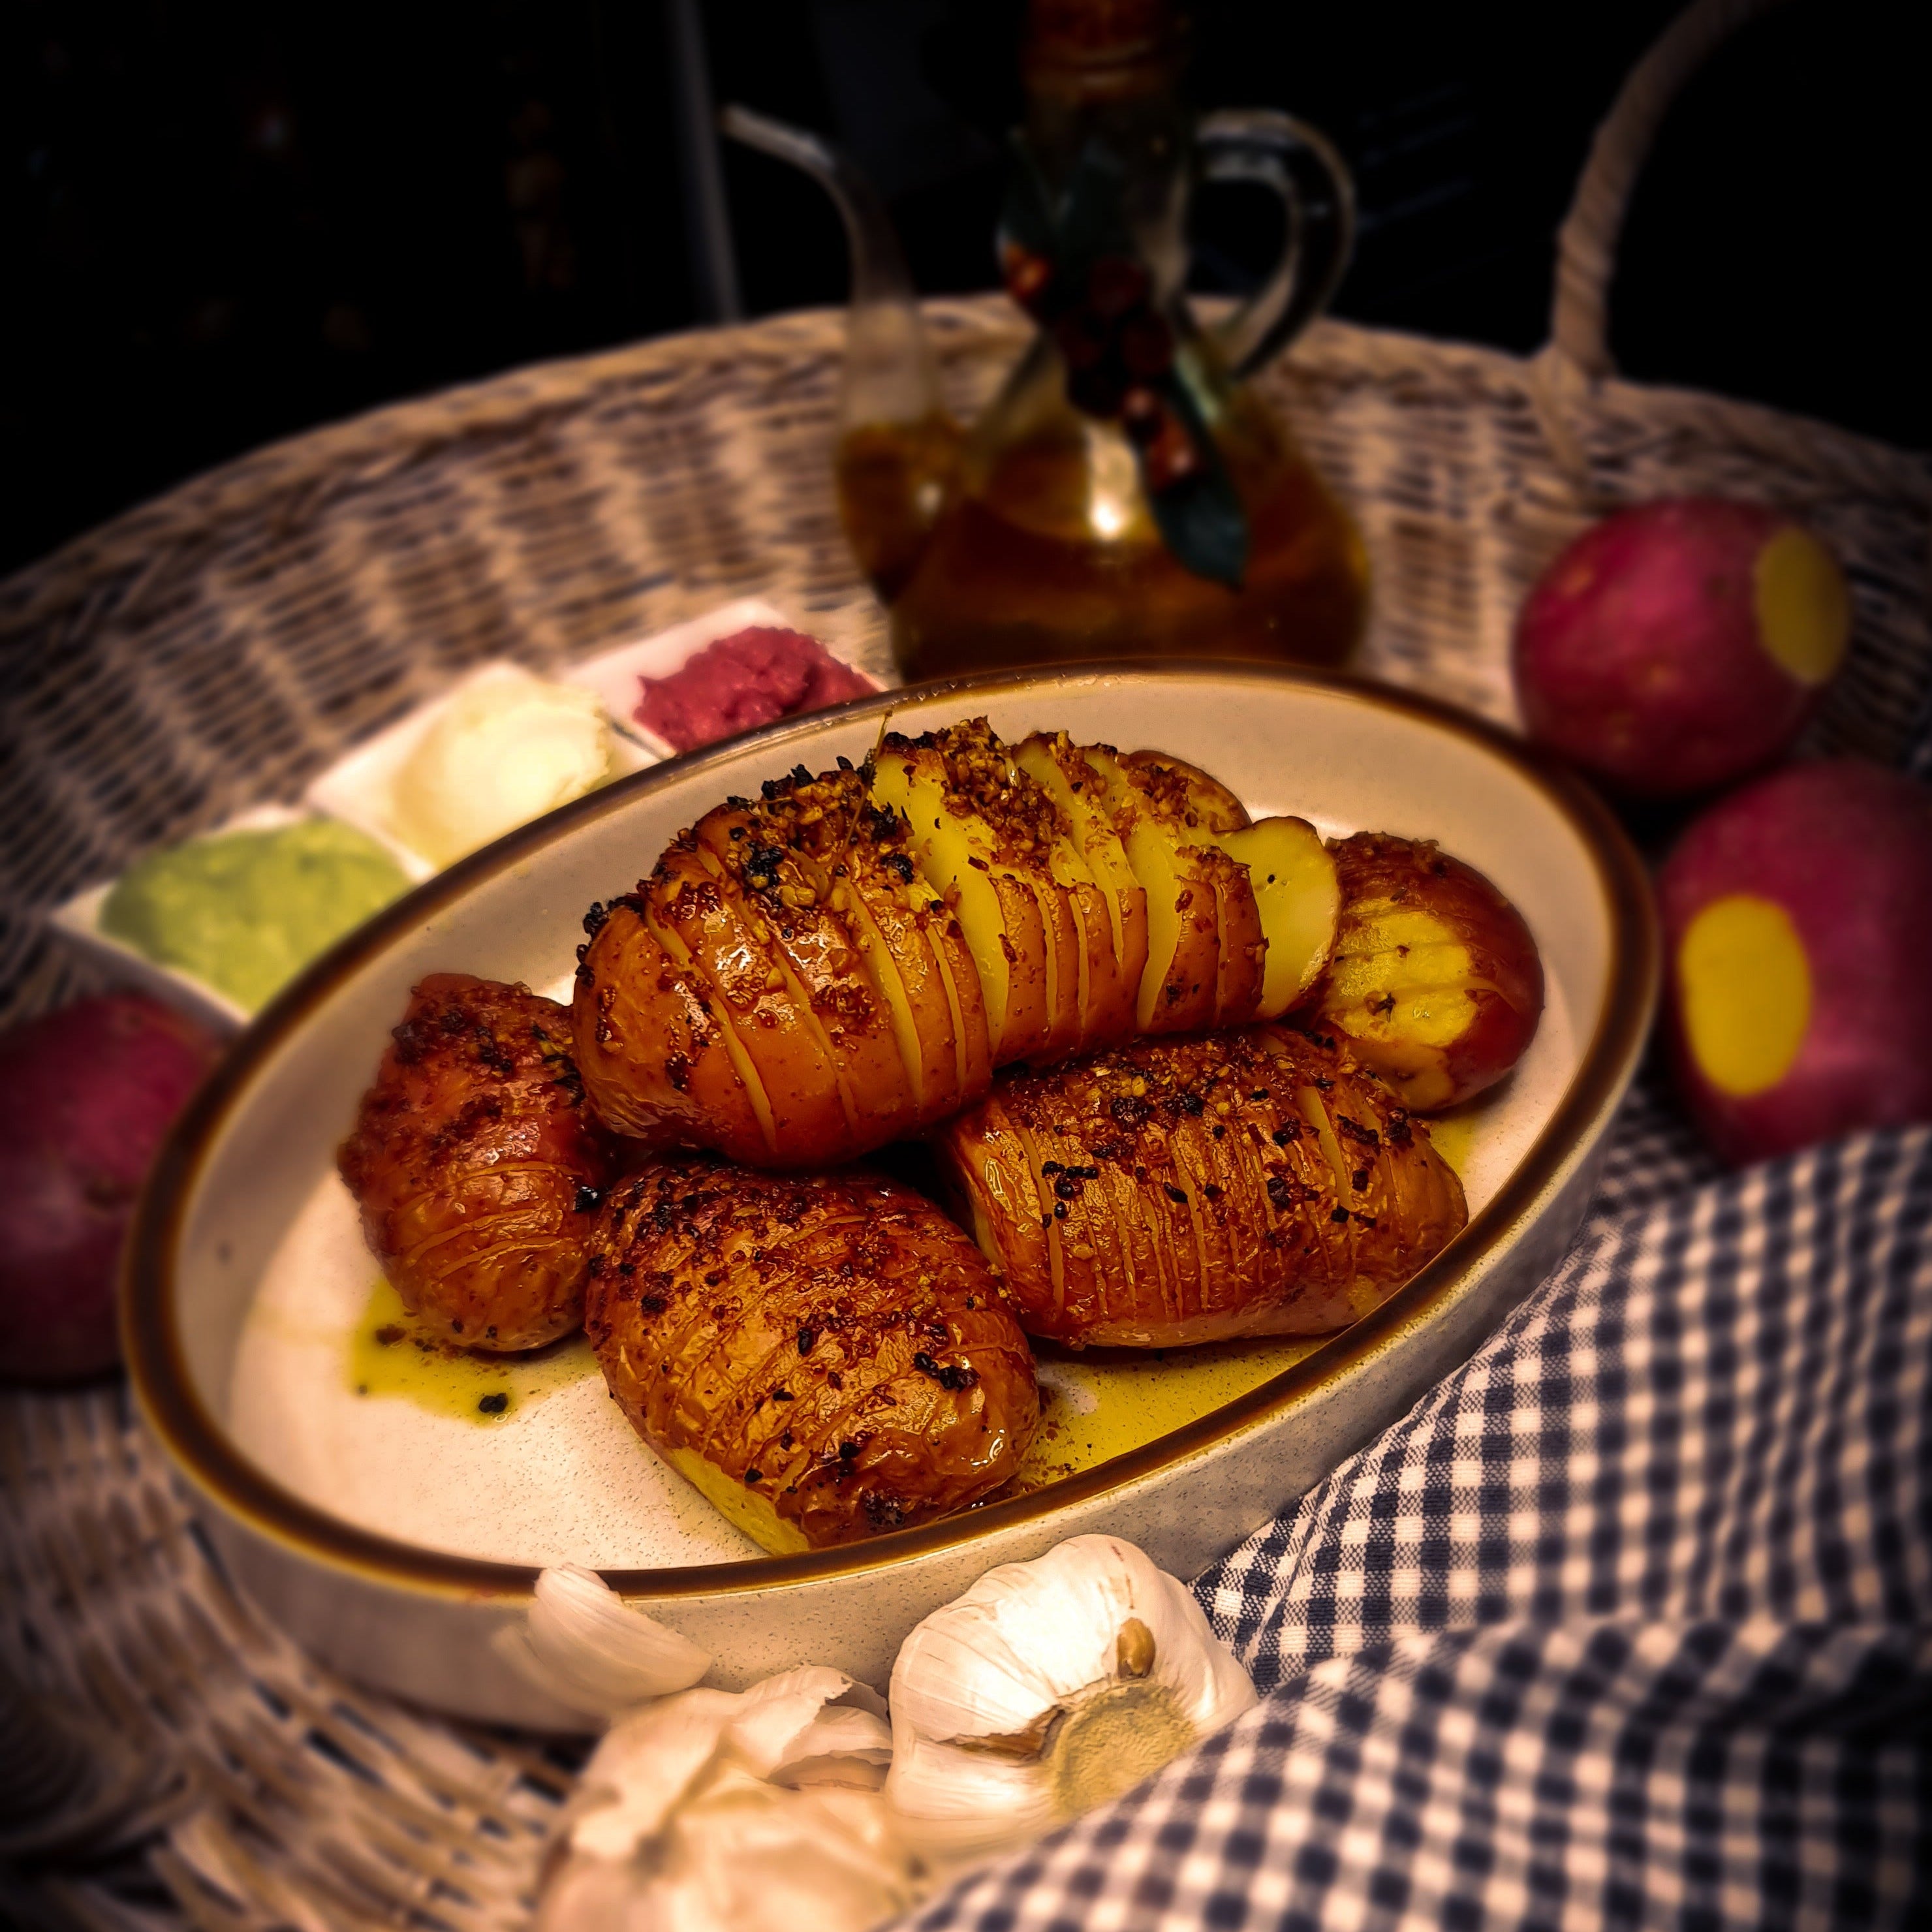 Side serving: Roast potato – 200g